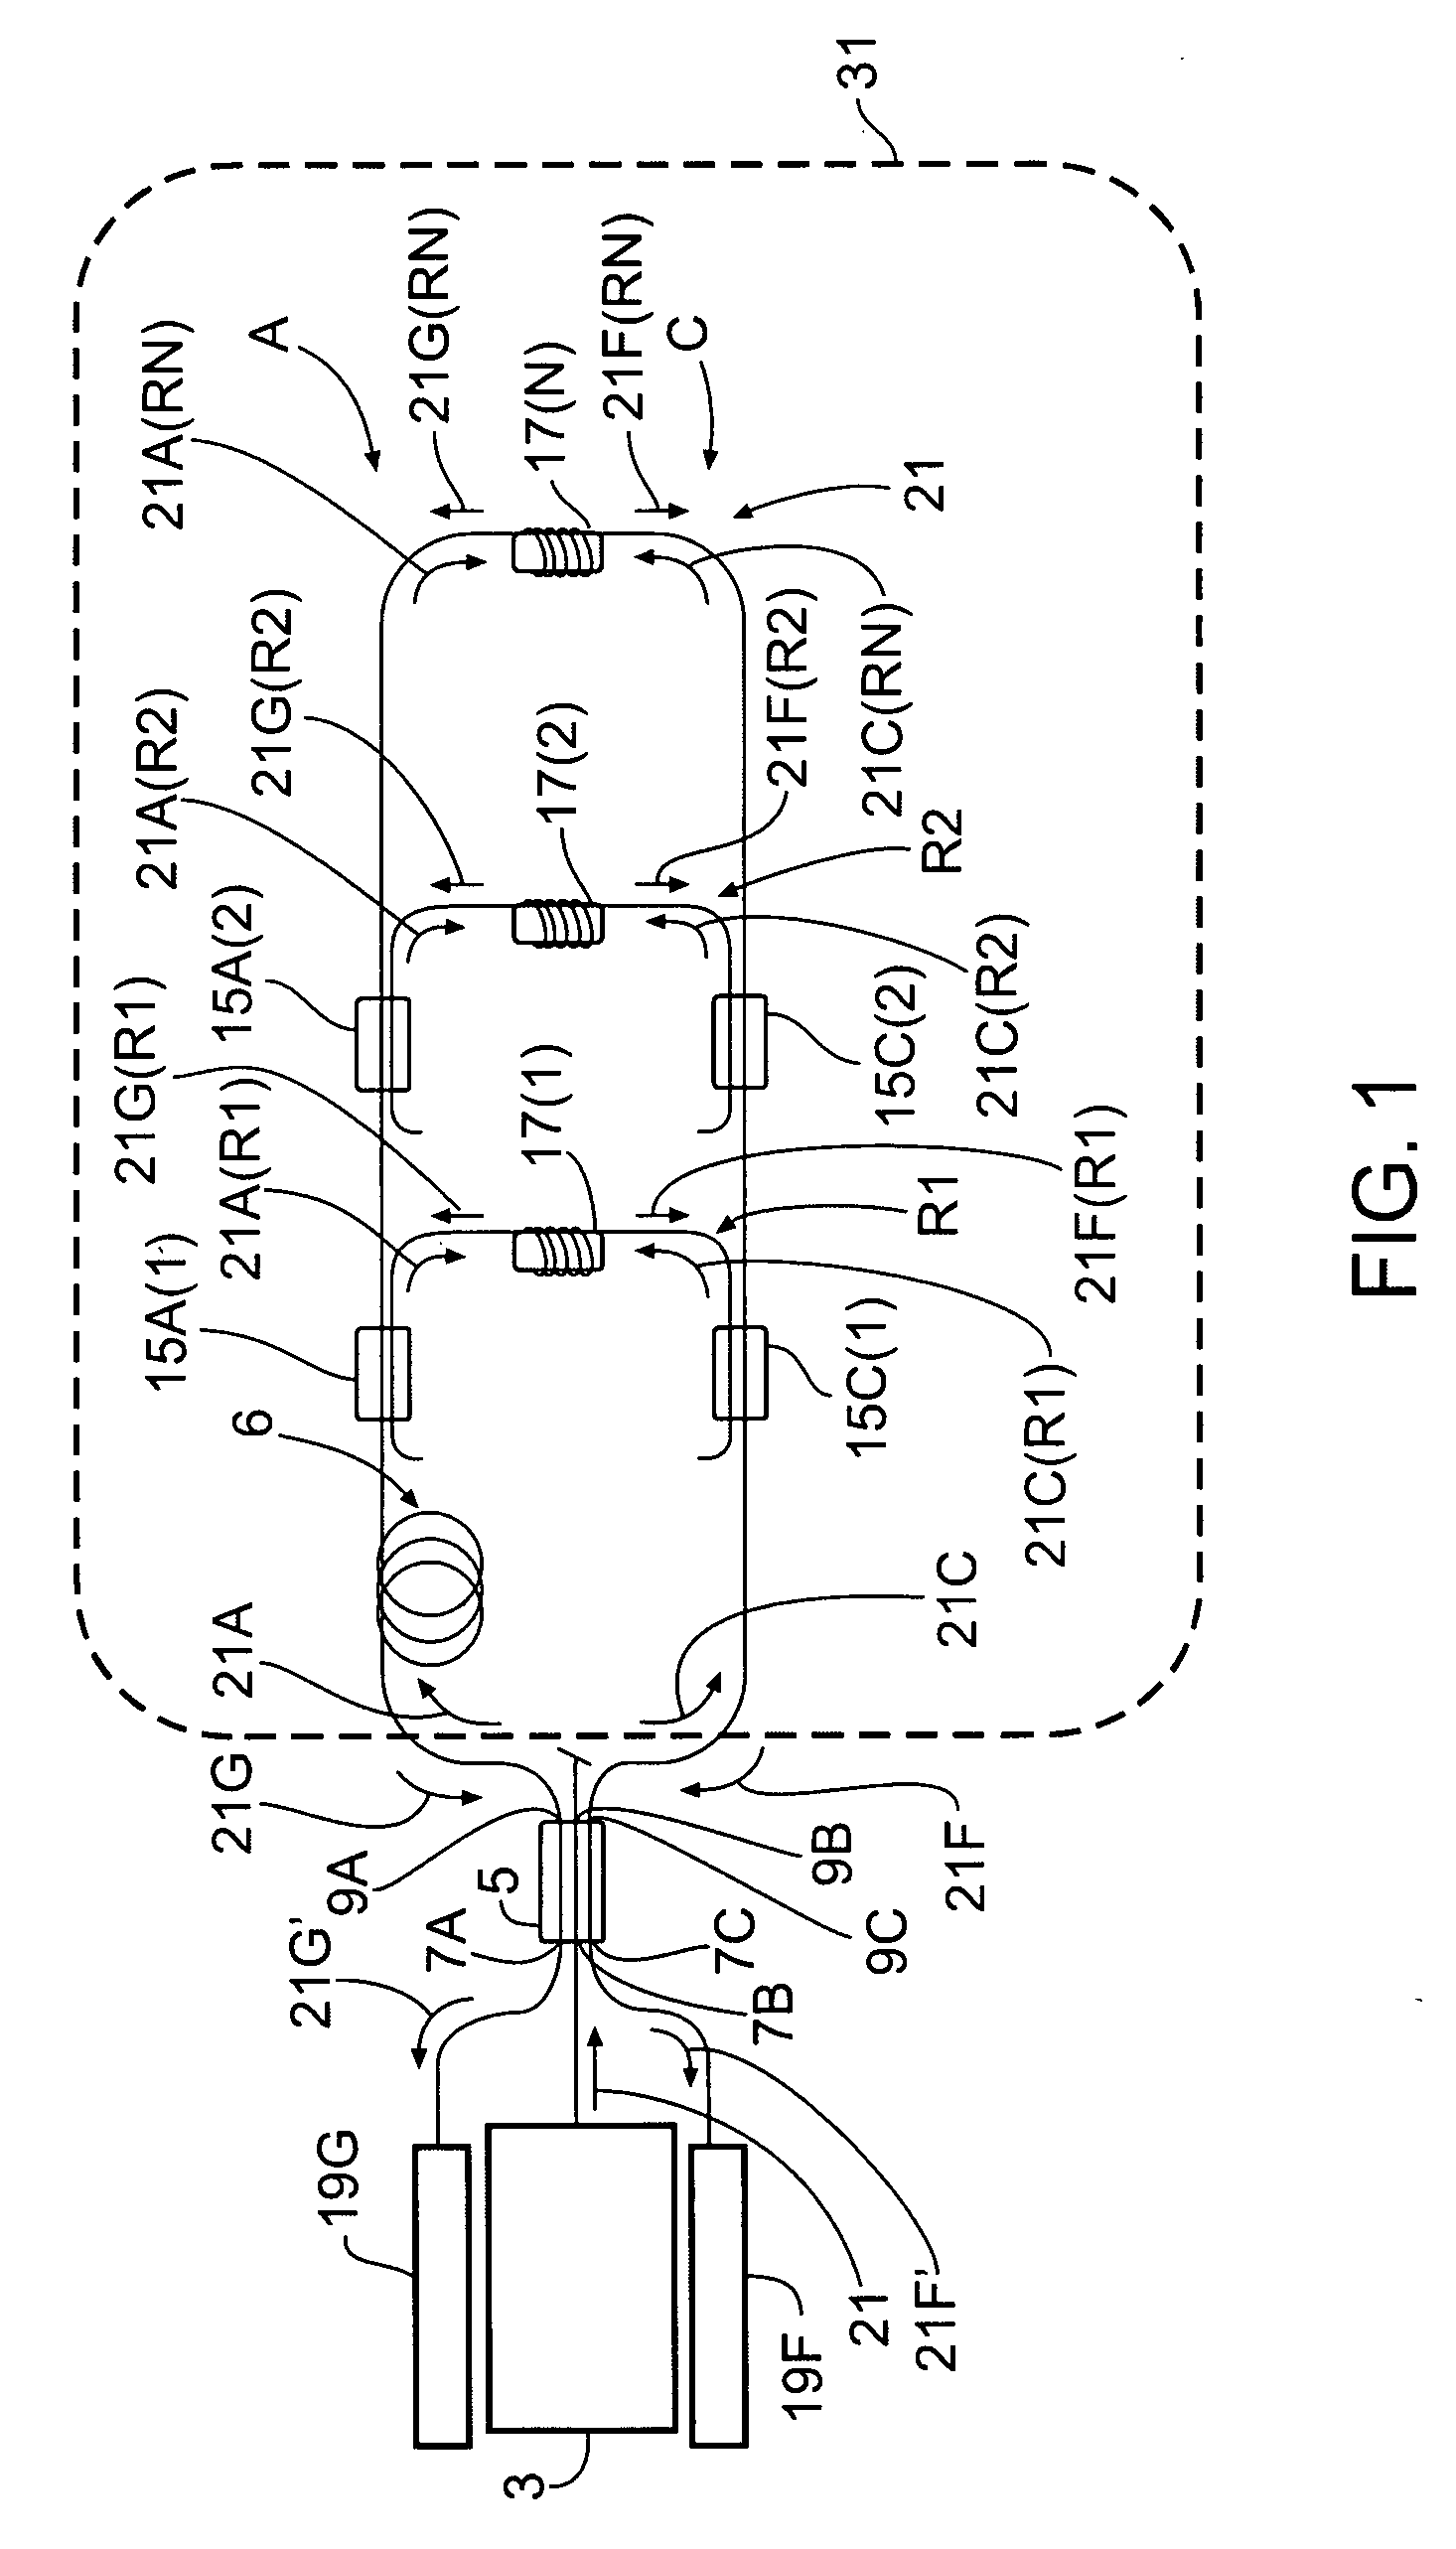 Multi wavelength sensor array